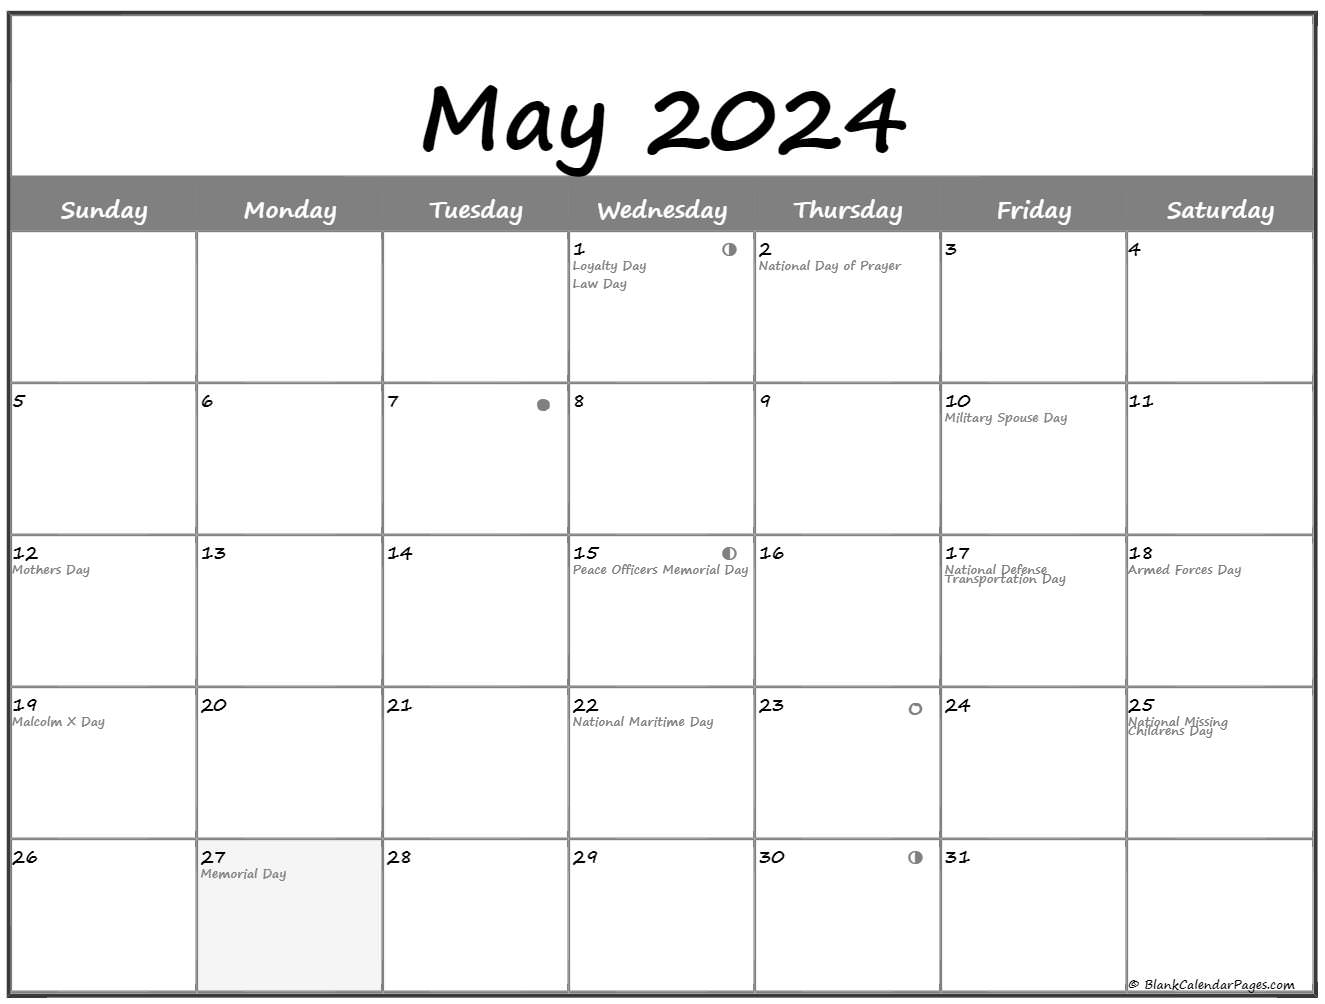 May 2024 Lunar Calendar | Moon Phase Calendar